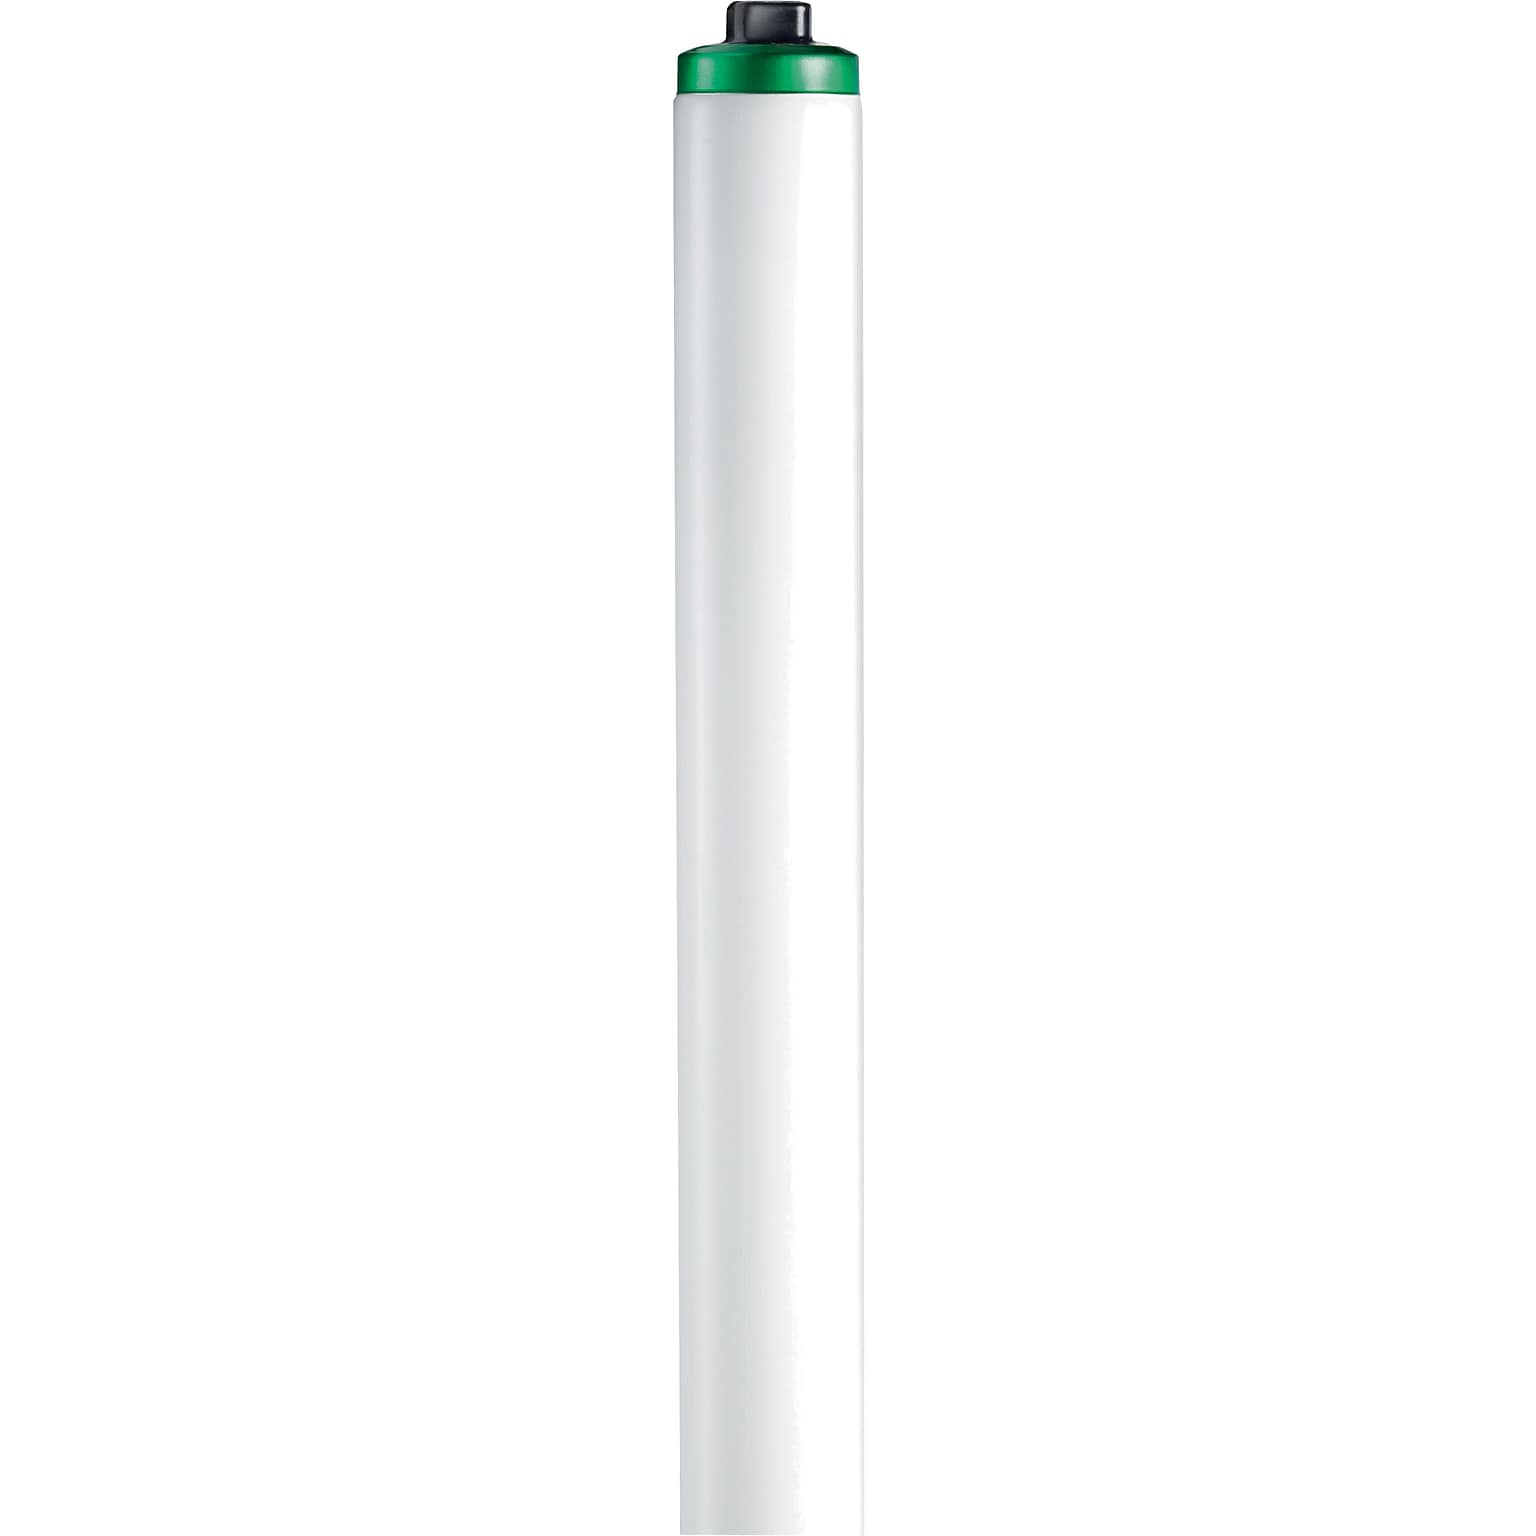 Philips Linear Fluorescent High Output Outdoor T12 Lamp, 110 Watts, Daylight, 15PK